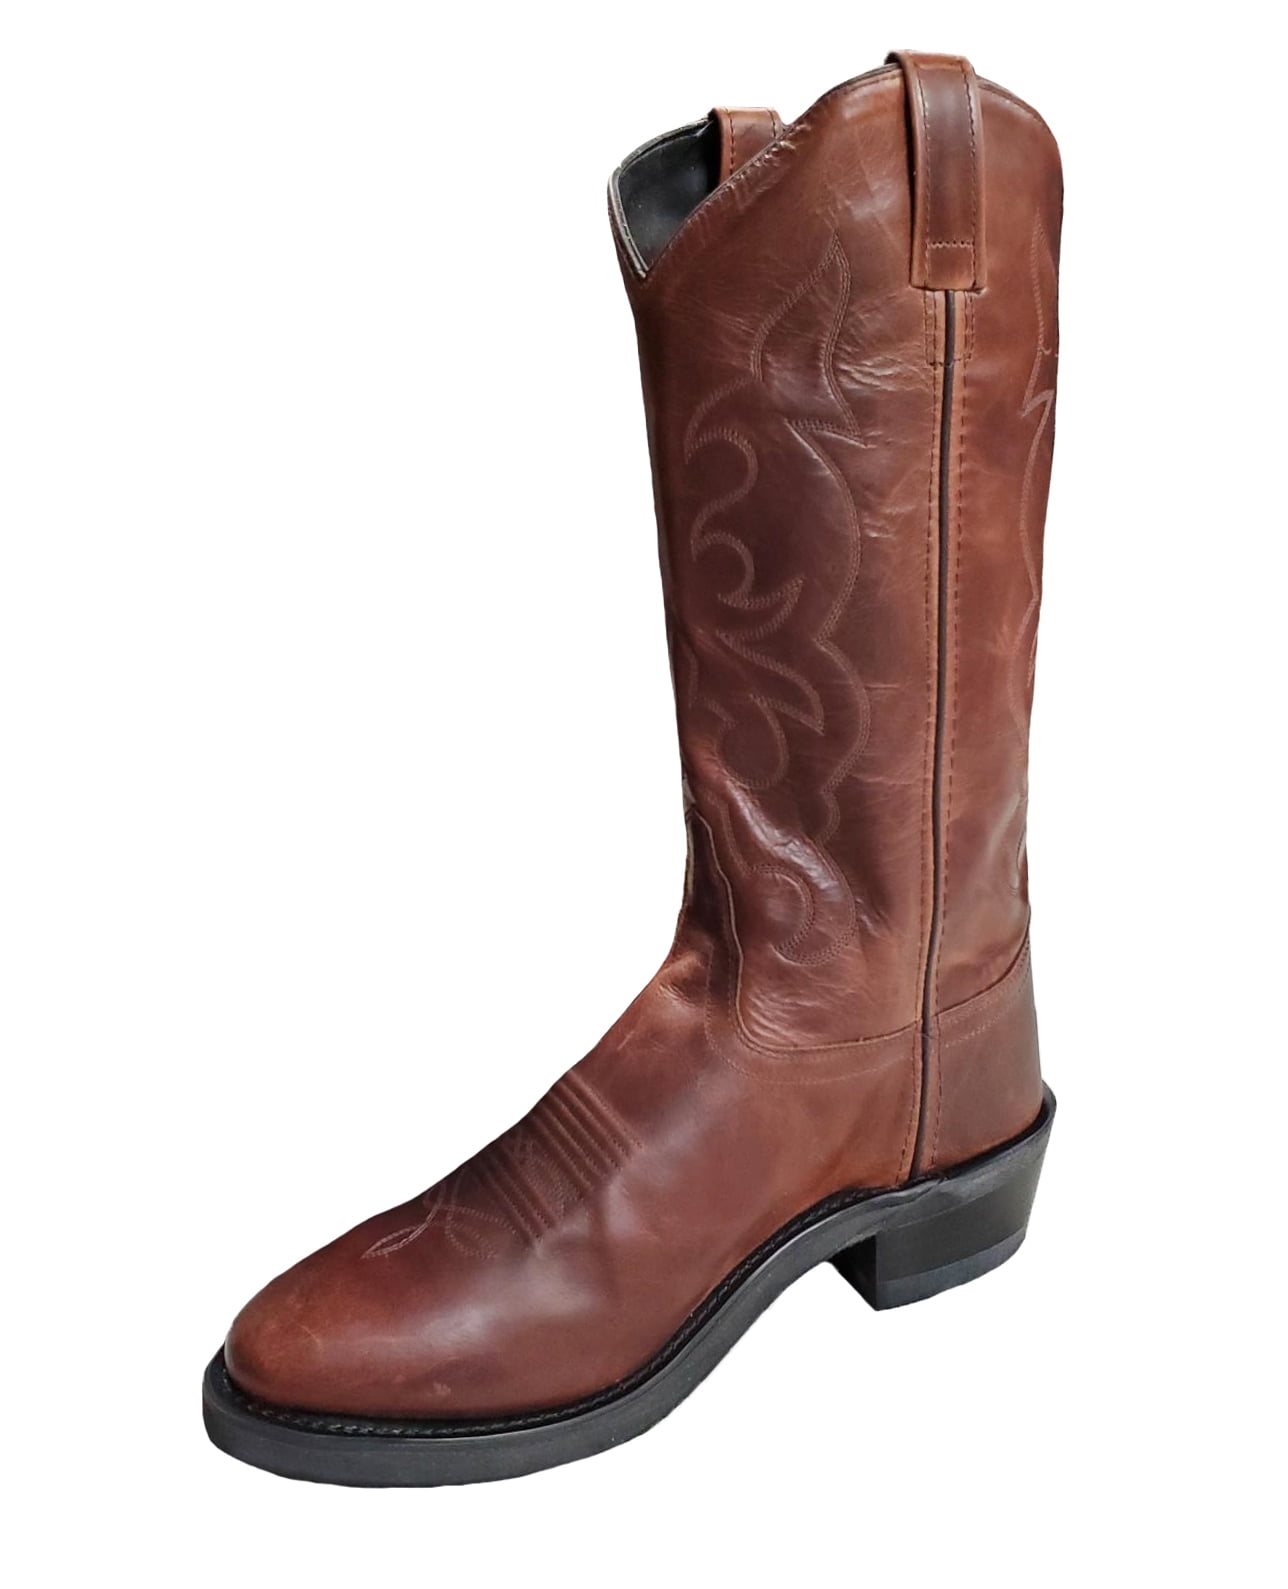 Woodland NEBRASKA Mens Leather Ankle Western Cowboy Boots Distressed Black